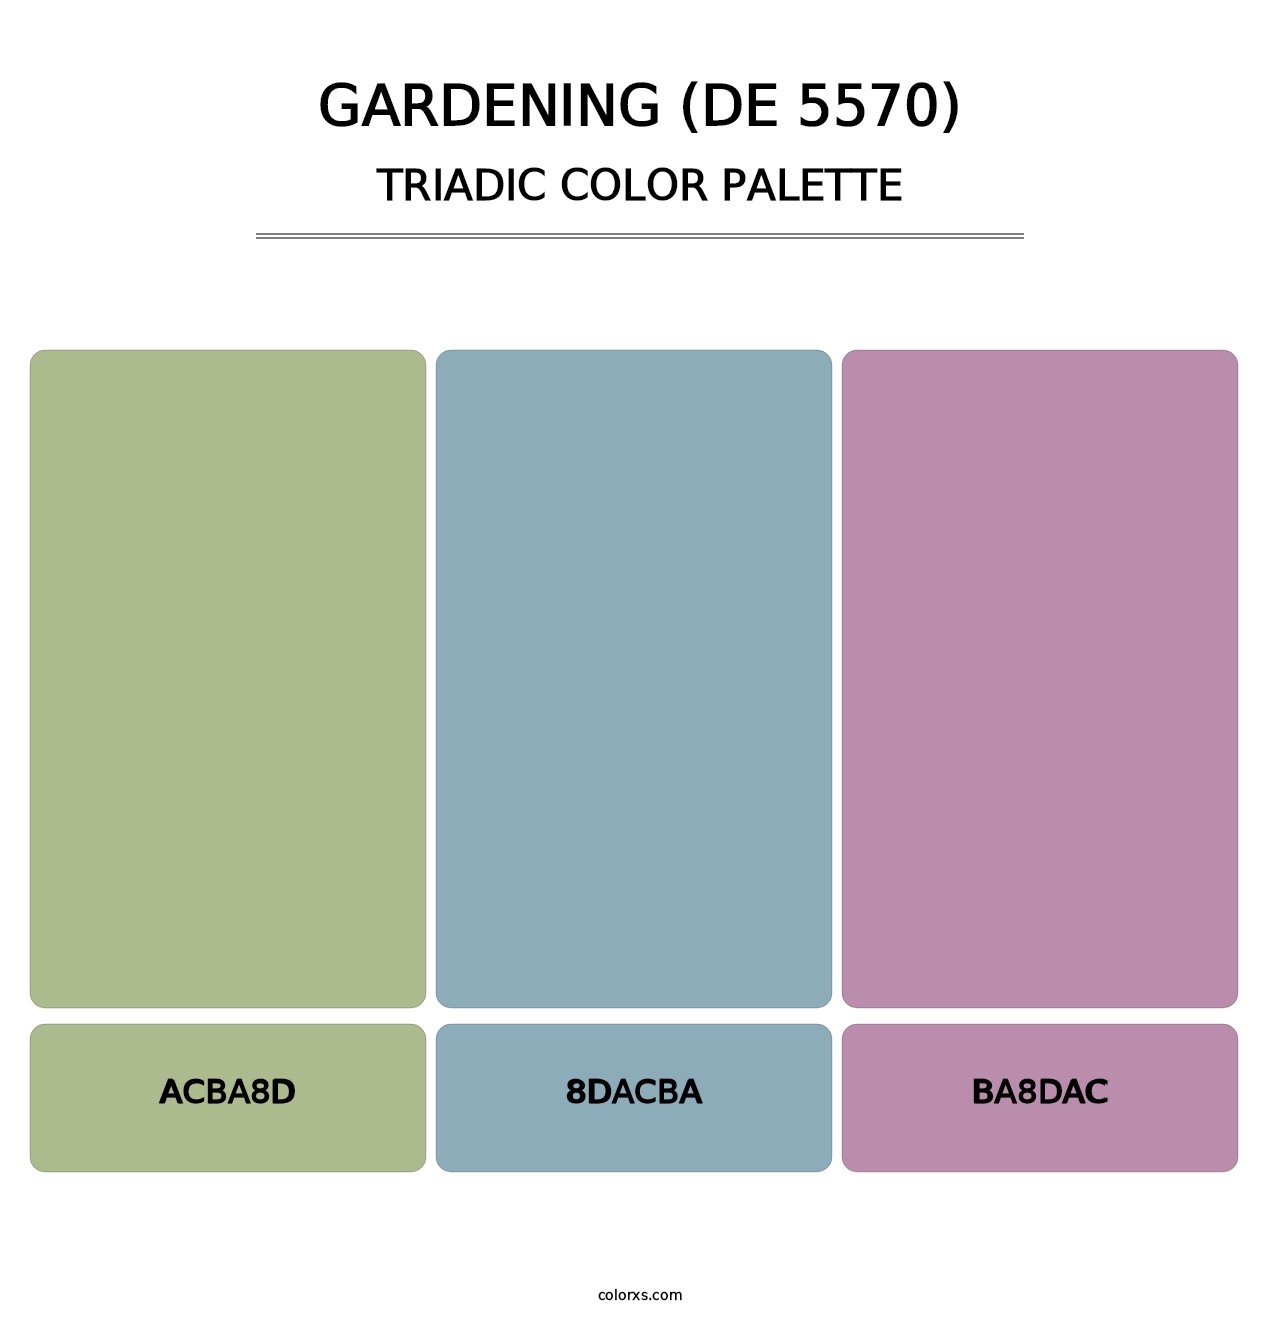 Gardening (DE 5570) - Triadic Color Palette